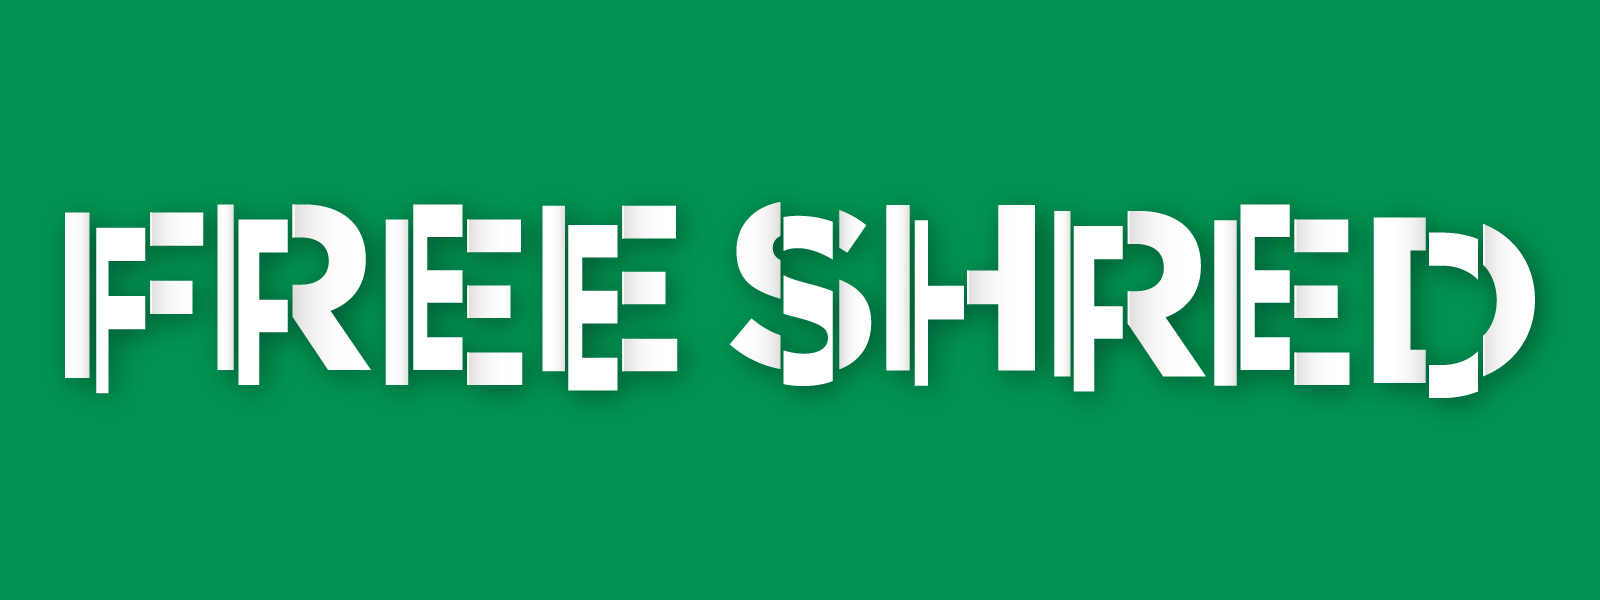 free shred